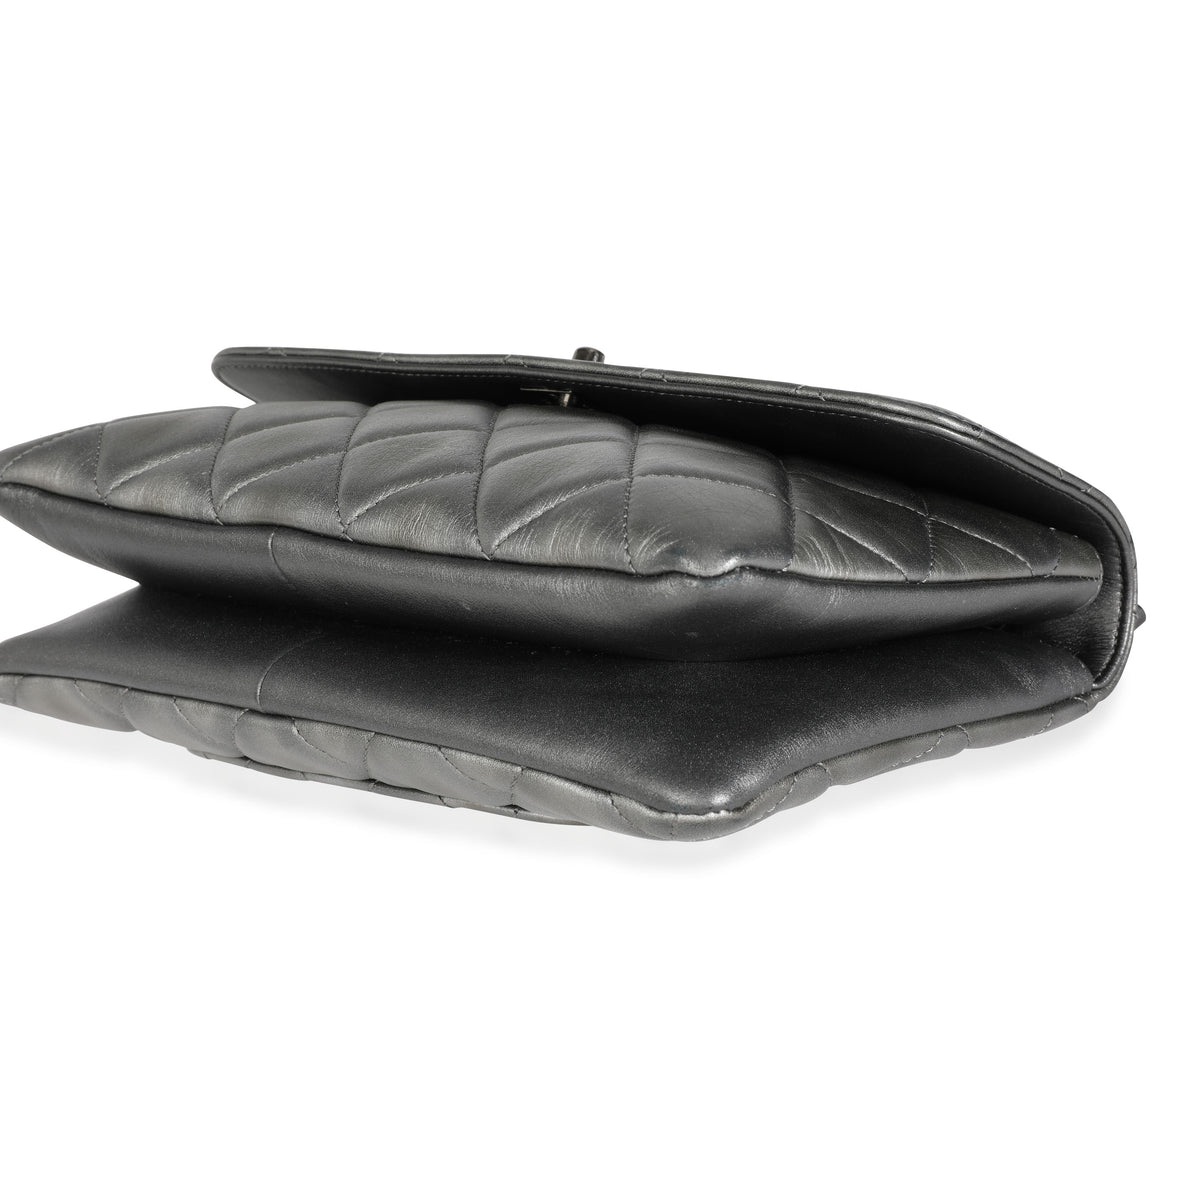 Chanel Dark Metallic Silver Quilted Lambskin Medium Trendy CC Shoulder Flap Bag